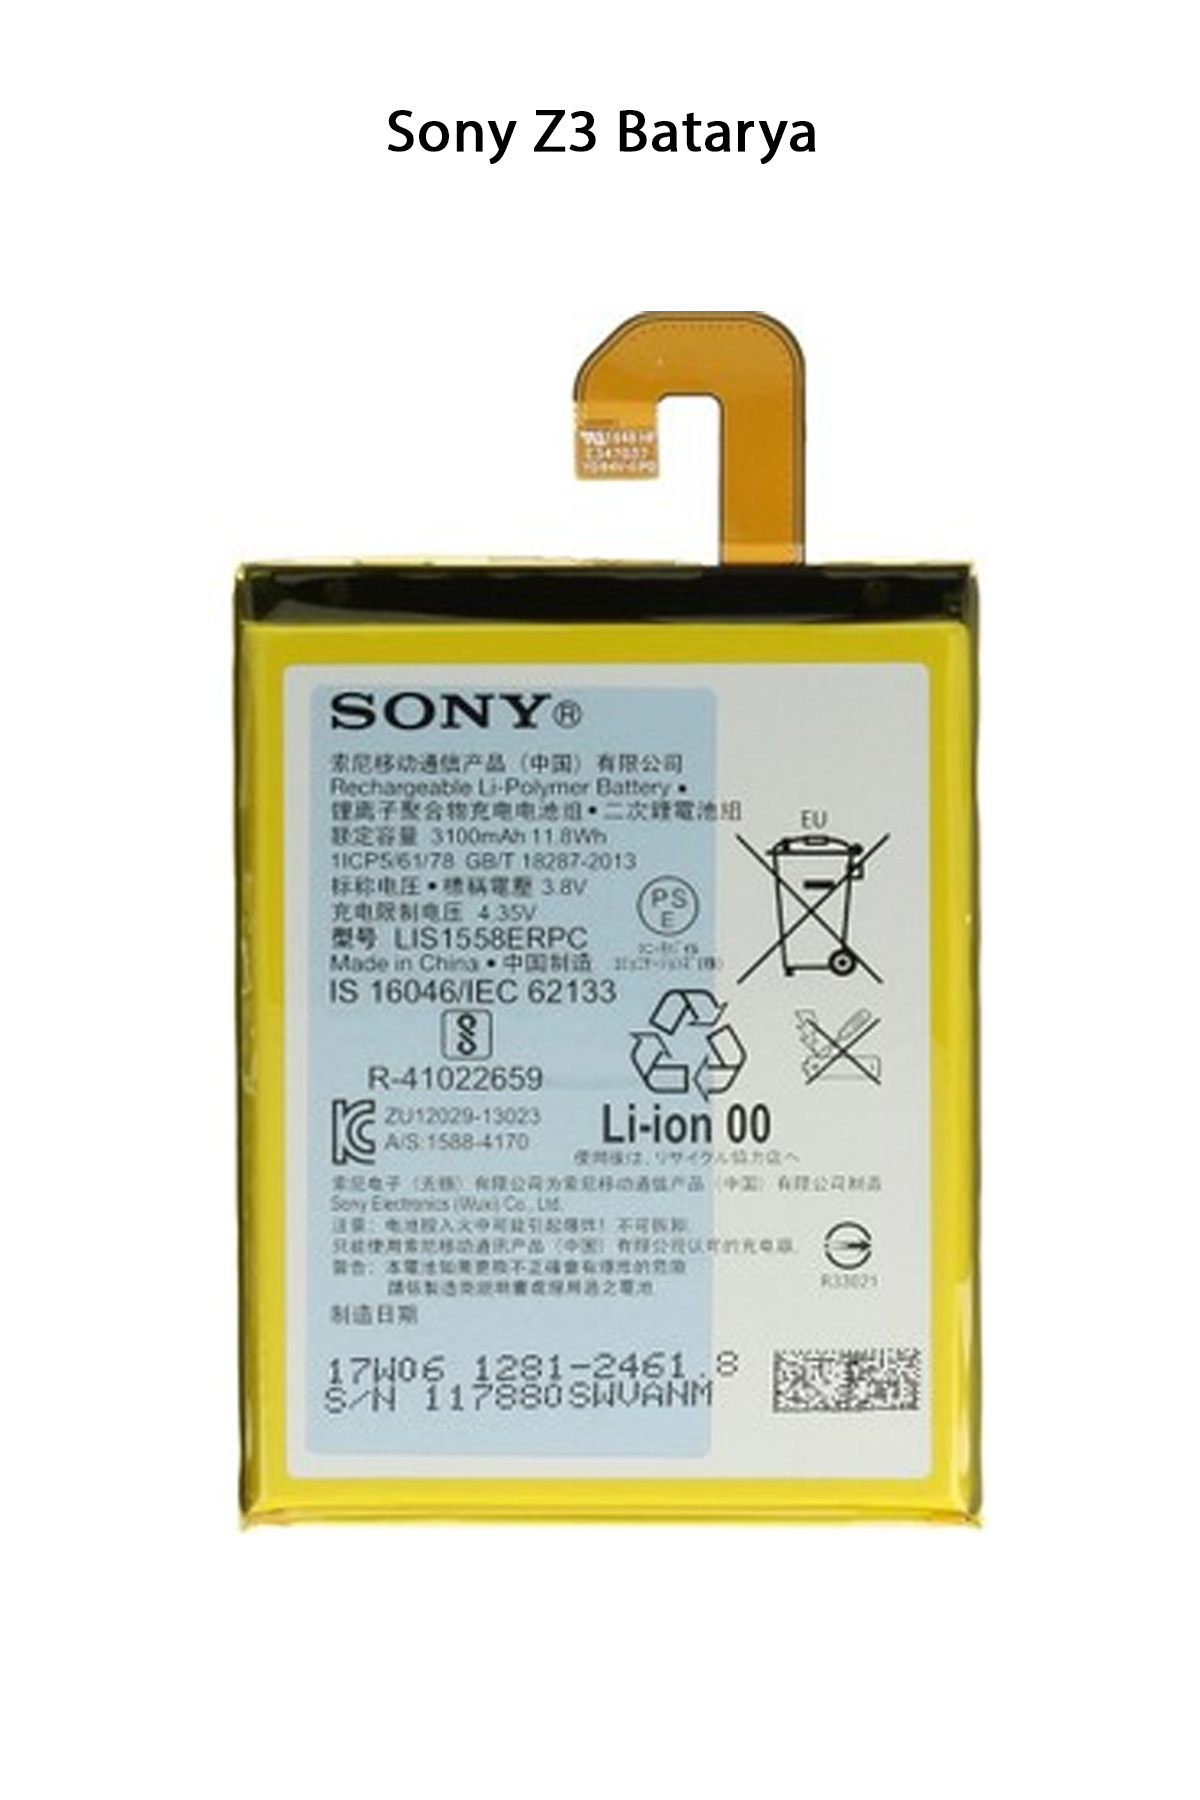 Sony Xperia Z3 Telefonlarla Uyumlu Batarya 3100 mAh